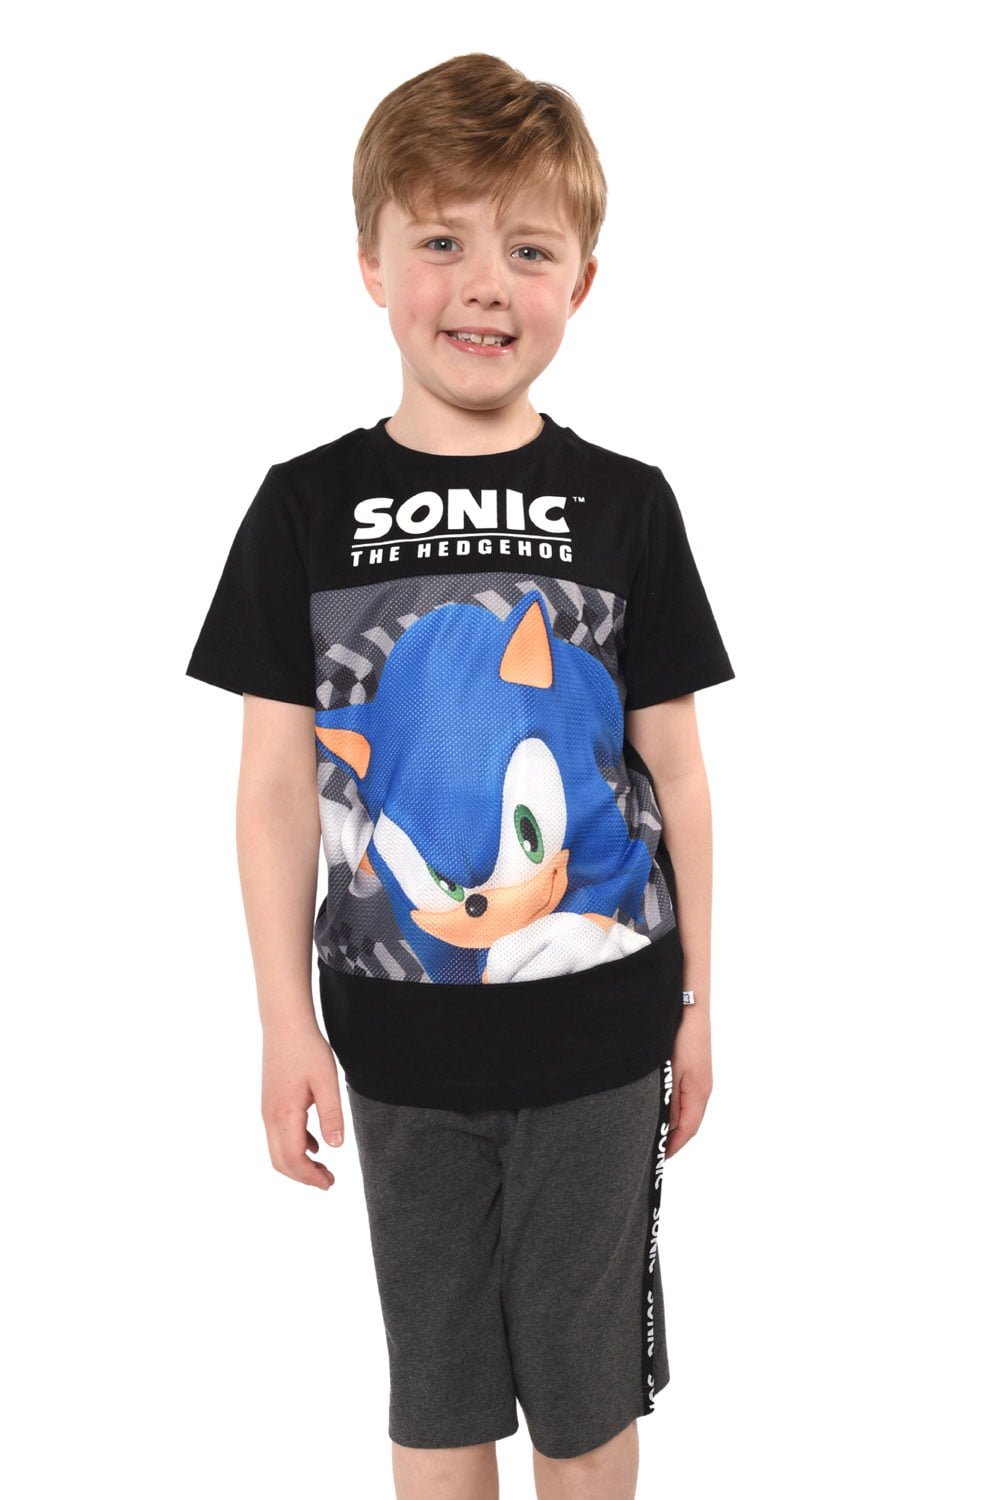 Sonic The Hedgehog Organic Cotton Shorty Pyjamas - Brand Threads